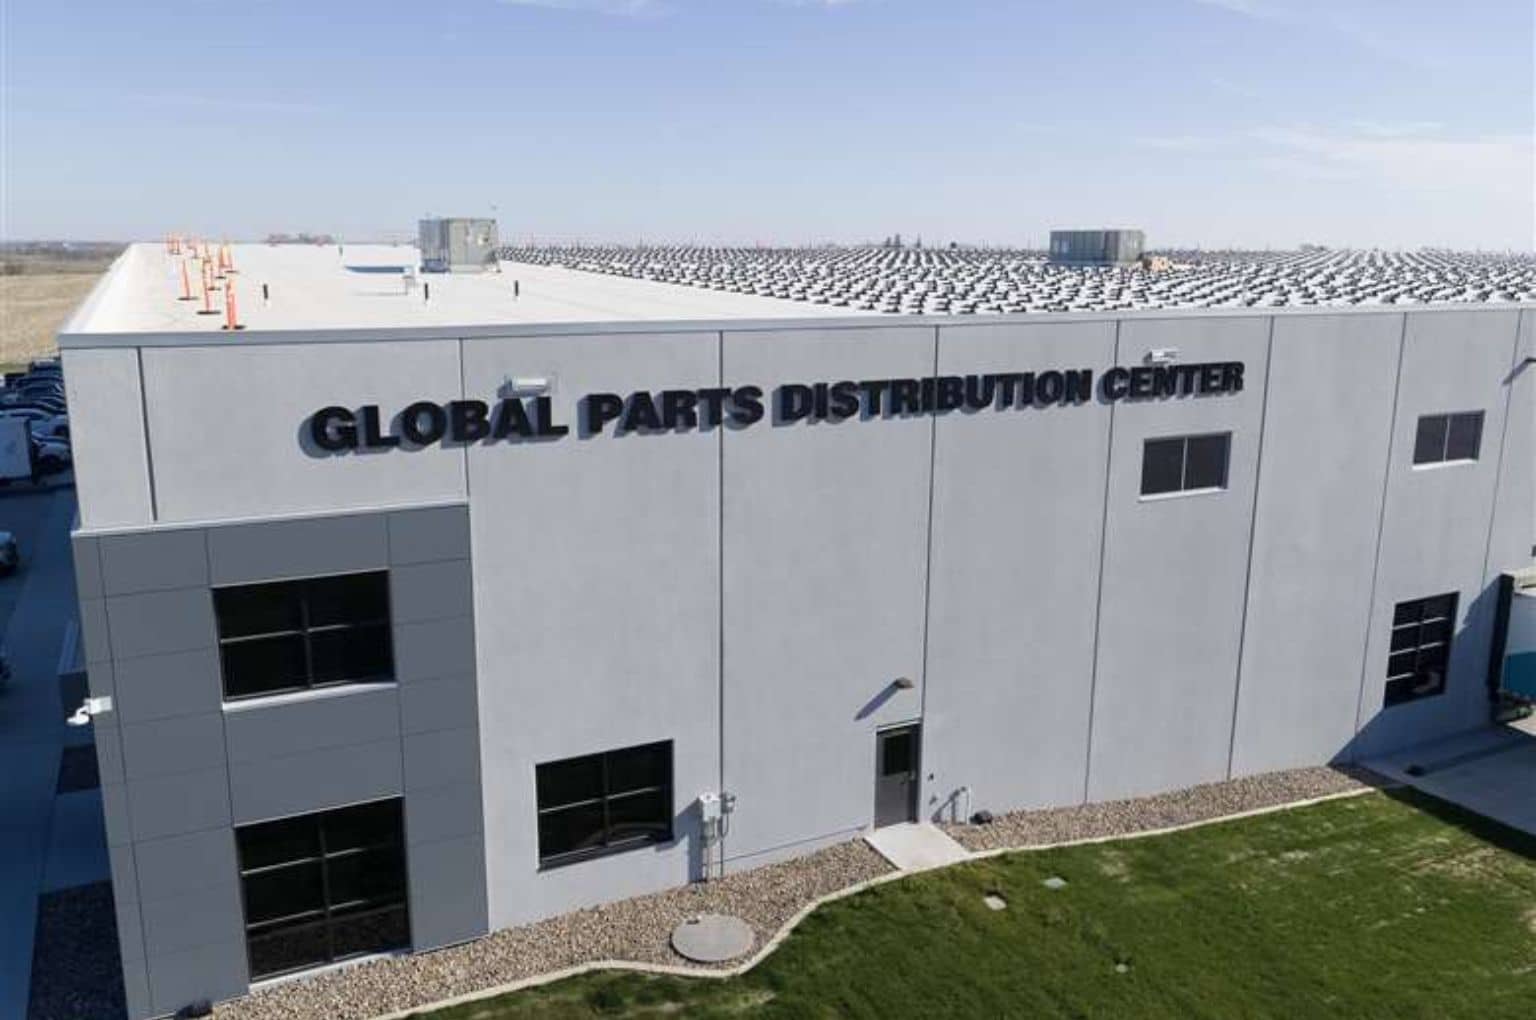 Vermeer parts distribution center